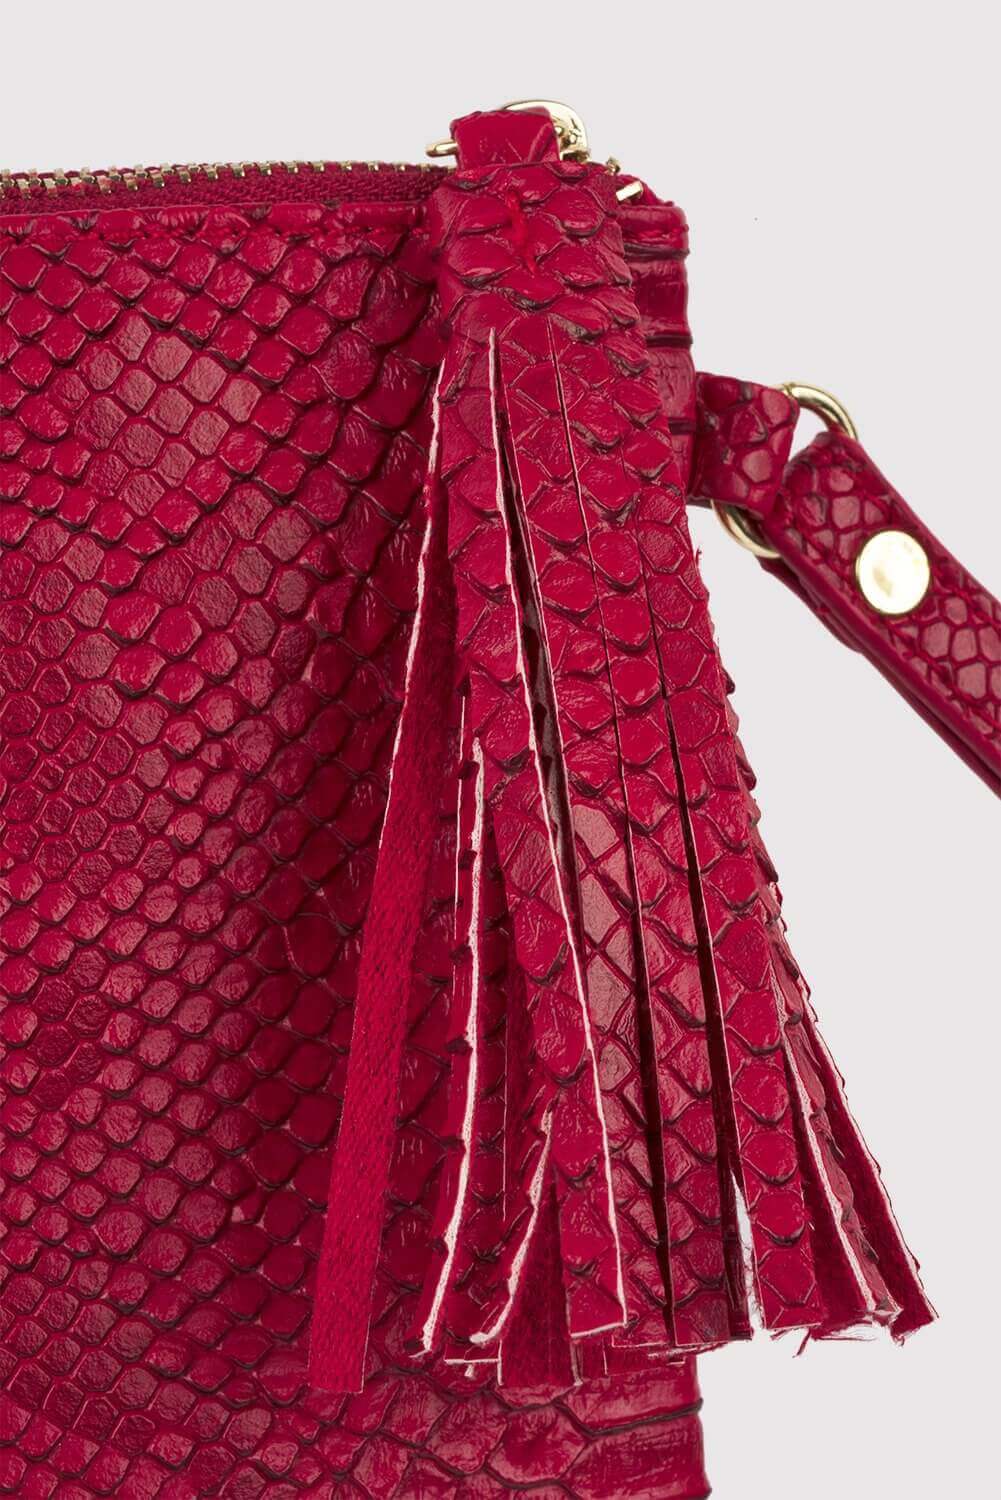 Americo Snake Print Wrist Strap Zipped Tassel Clutch Bag in Red